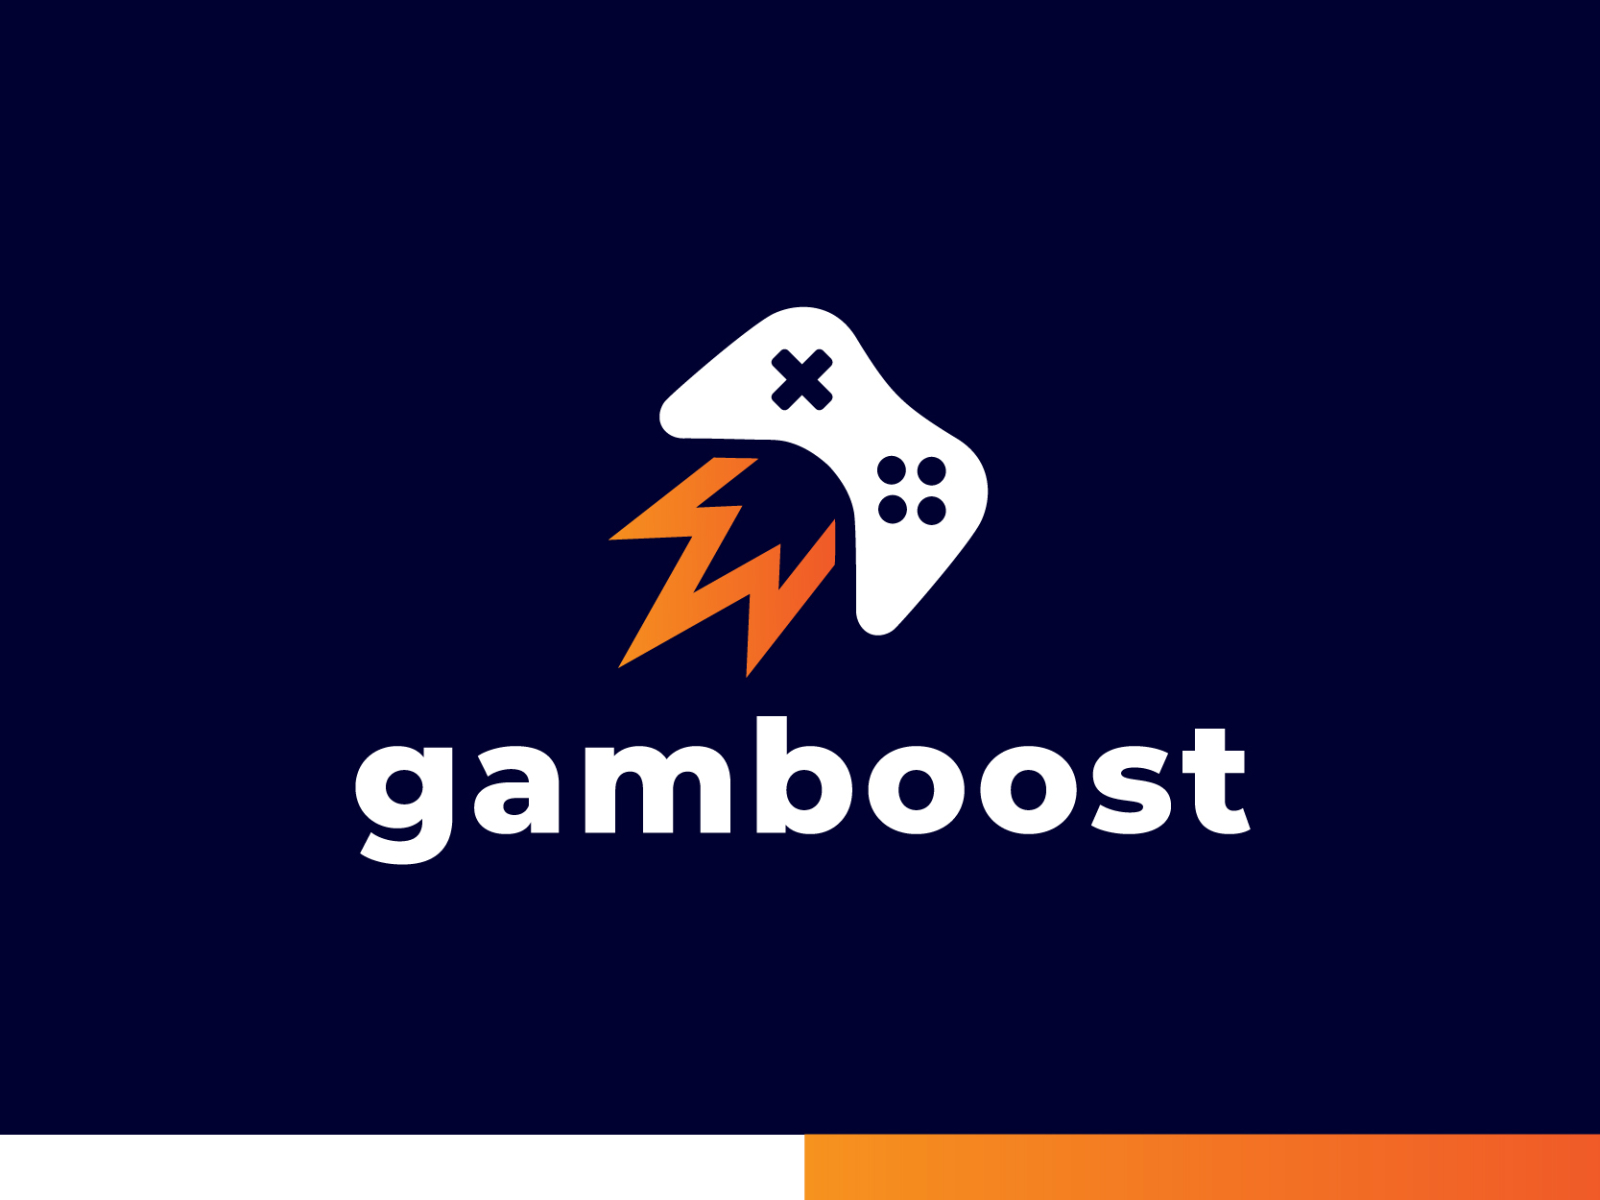 GAMBOOST - Logo Design by Superdon on Dribbble